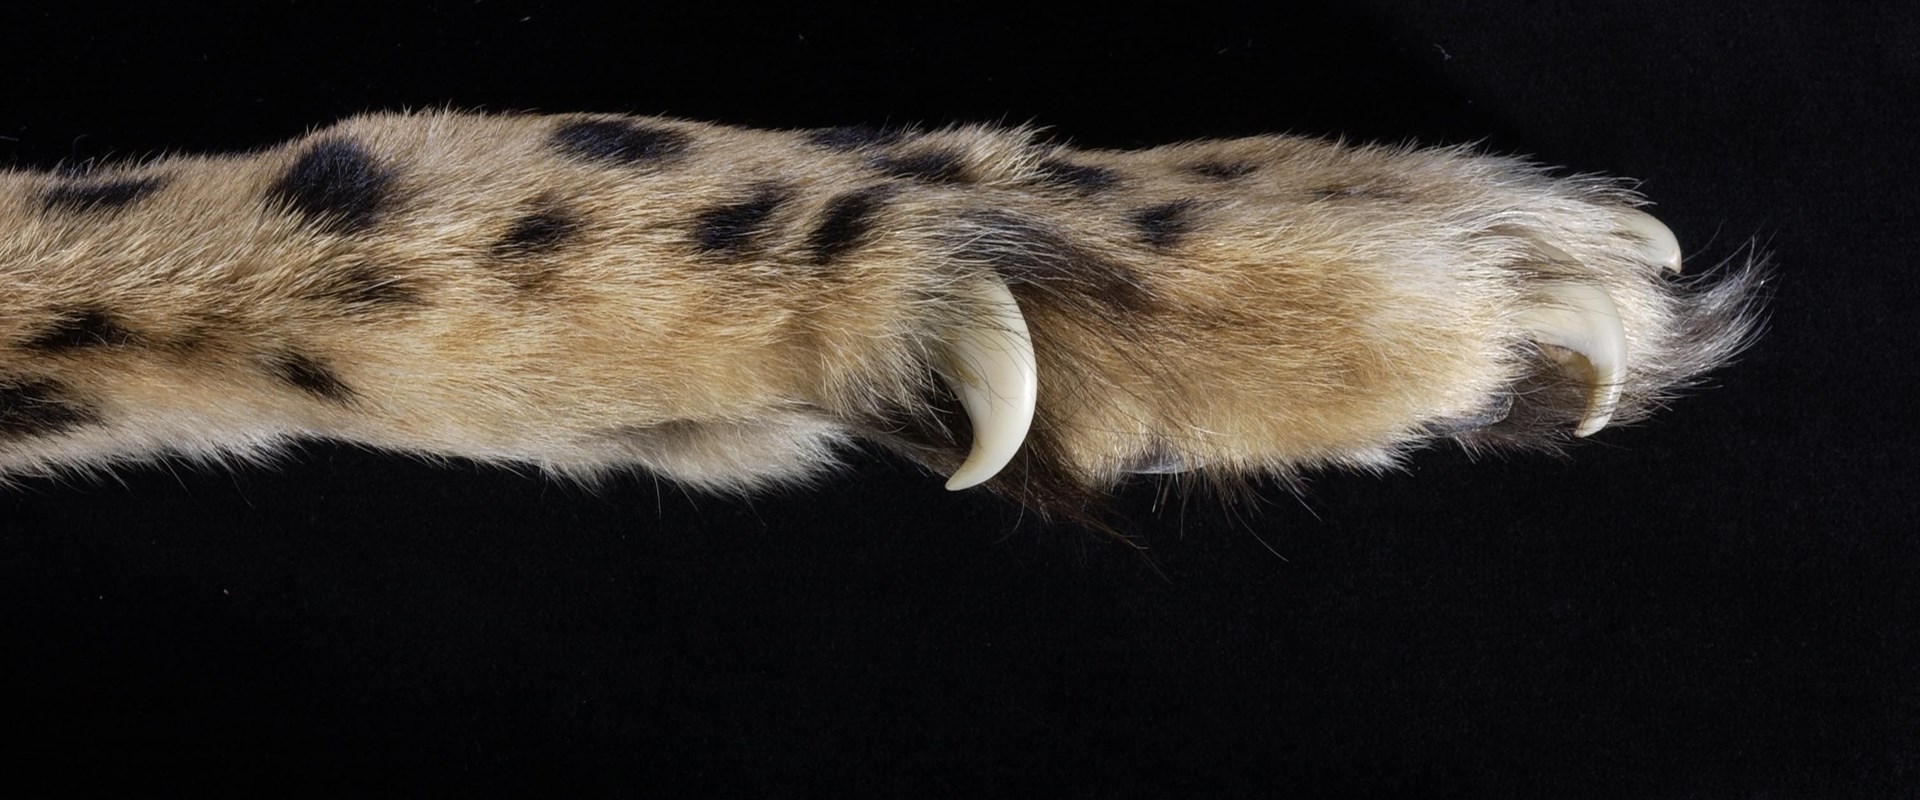 Cheetah Dew Claw Cats01